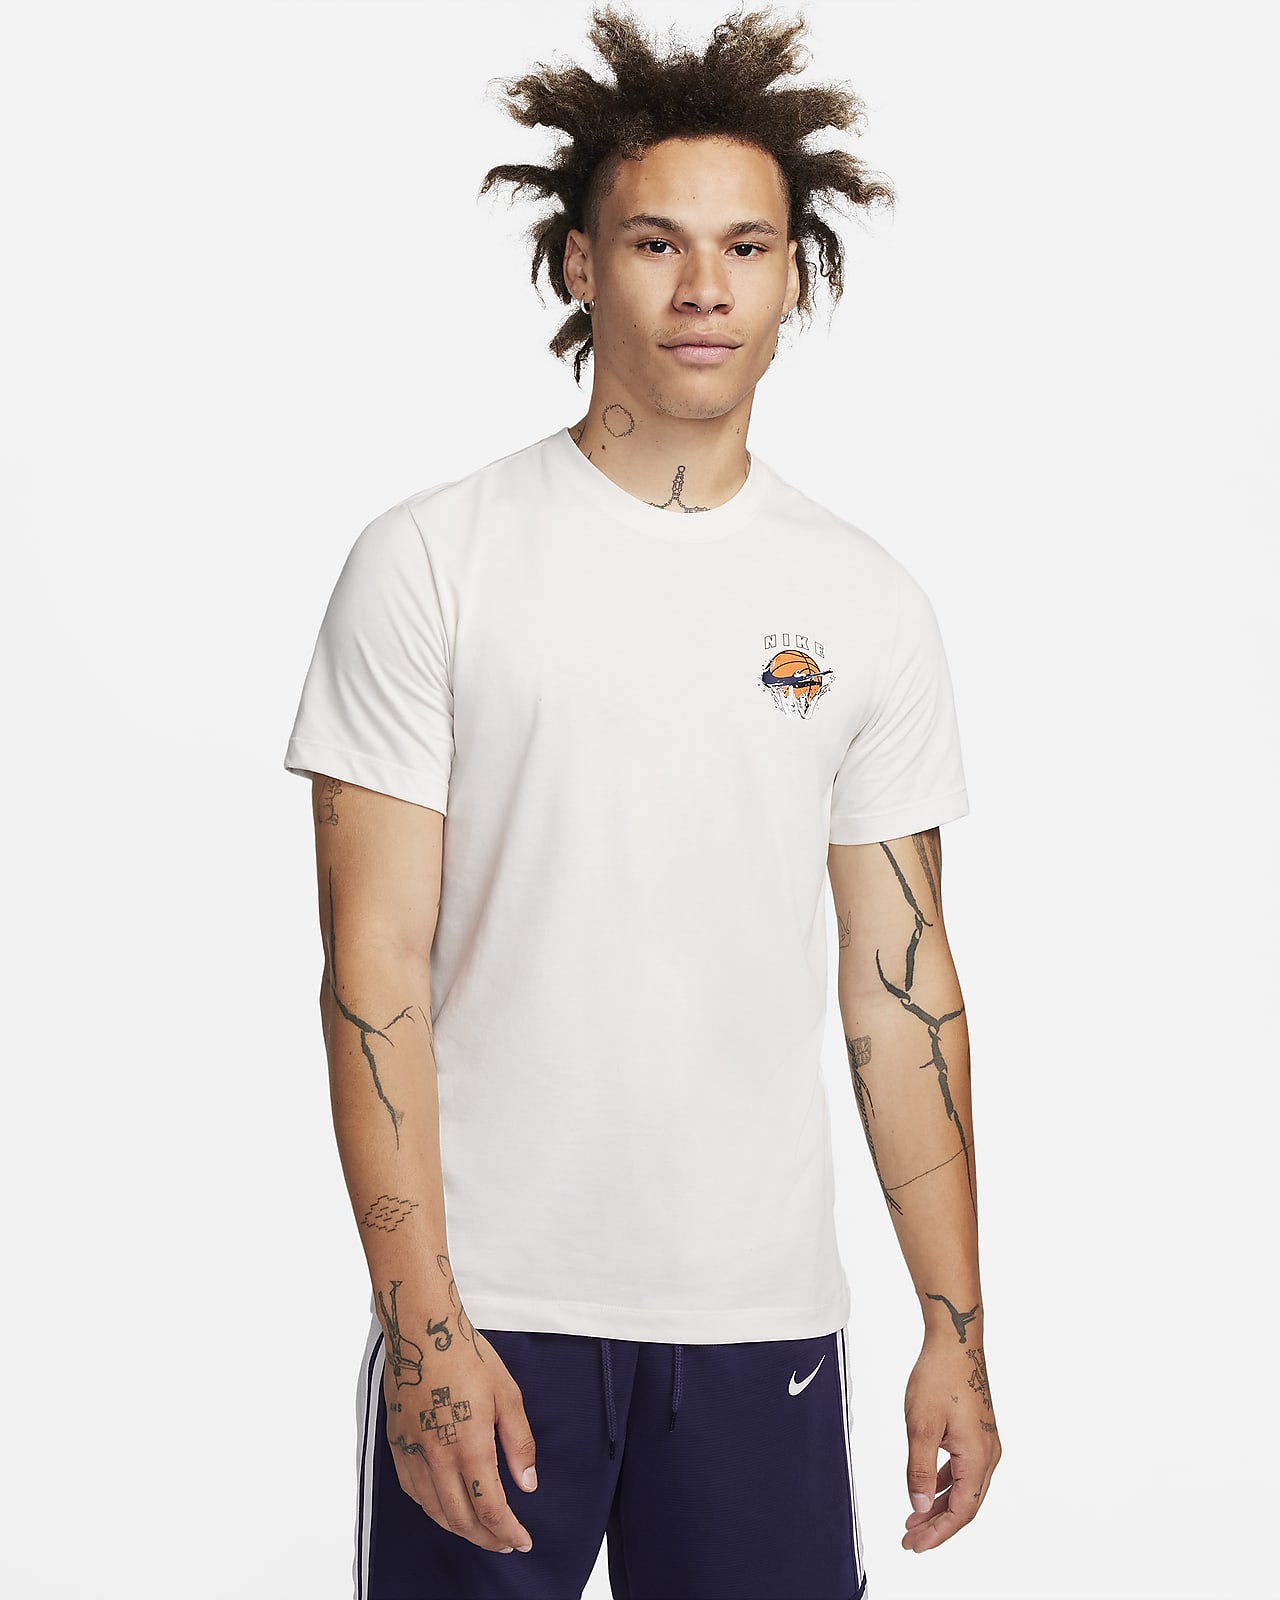 Nike Men's Dri-FIT Basketball T-Shirt